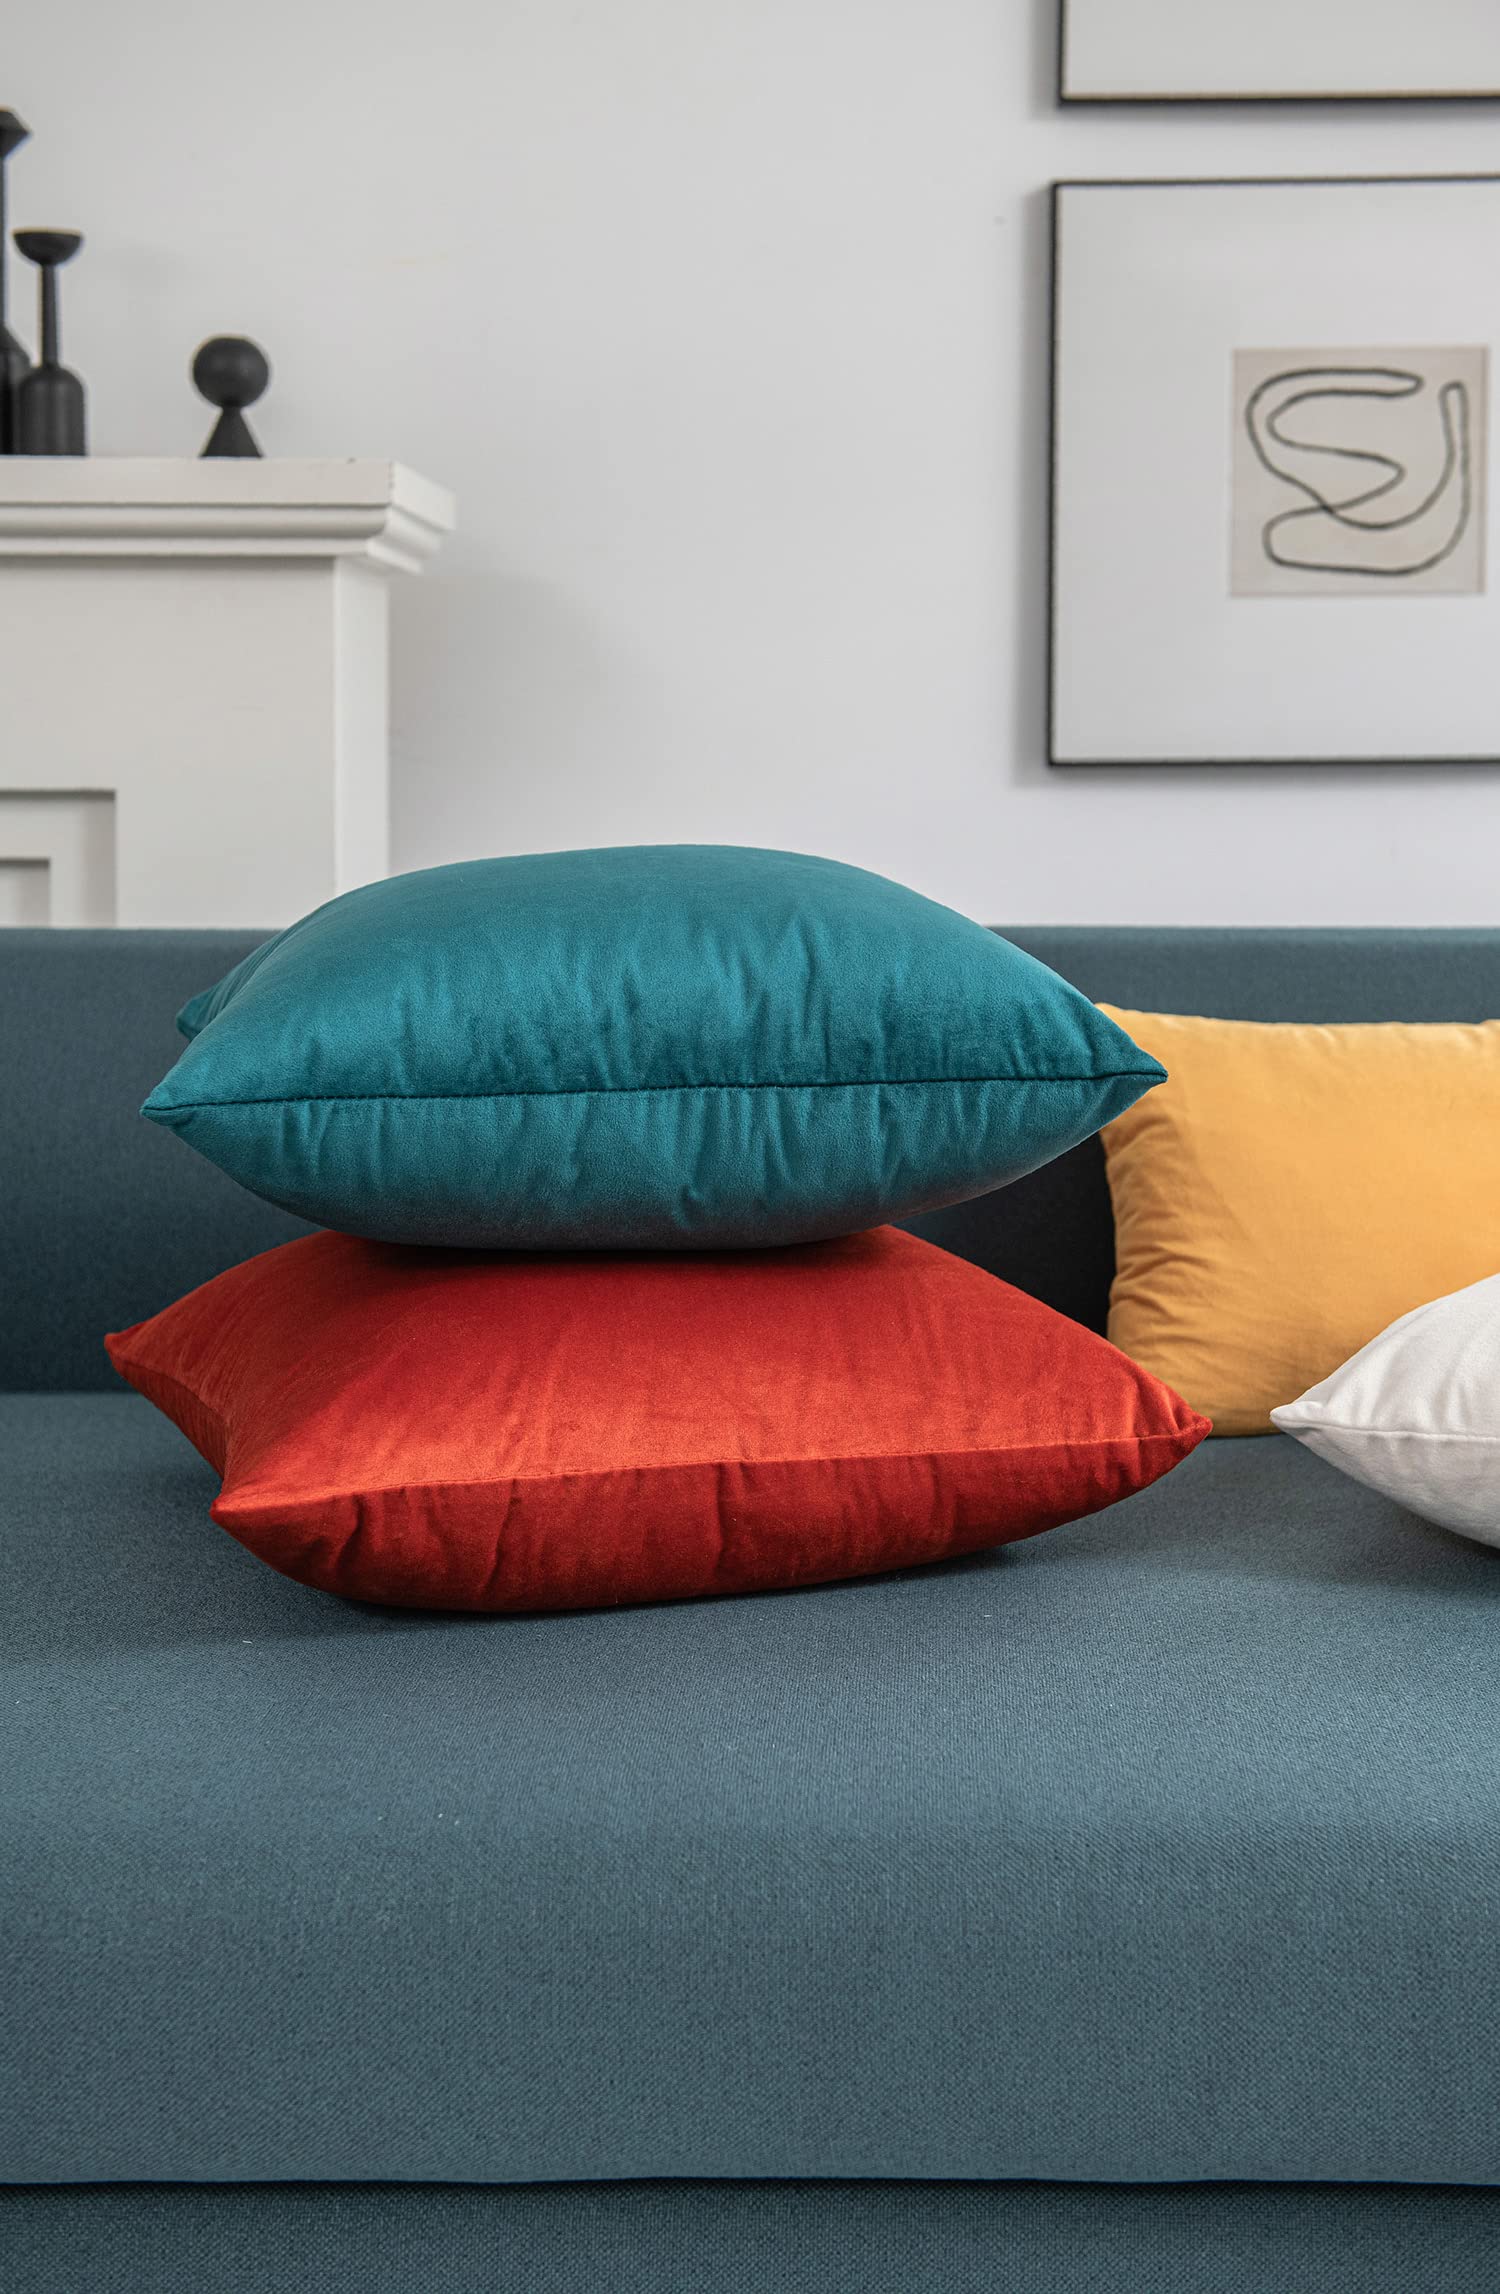 Throw Pillow Cases 18x18 Teal: 2 Pack Cozy Soft Velvet Square Decorative Pillow Covers for Farmhouse Home Decor, DEZENE